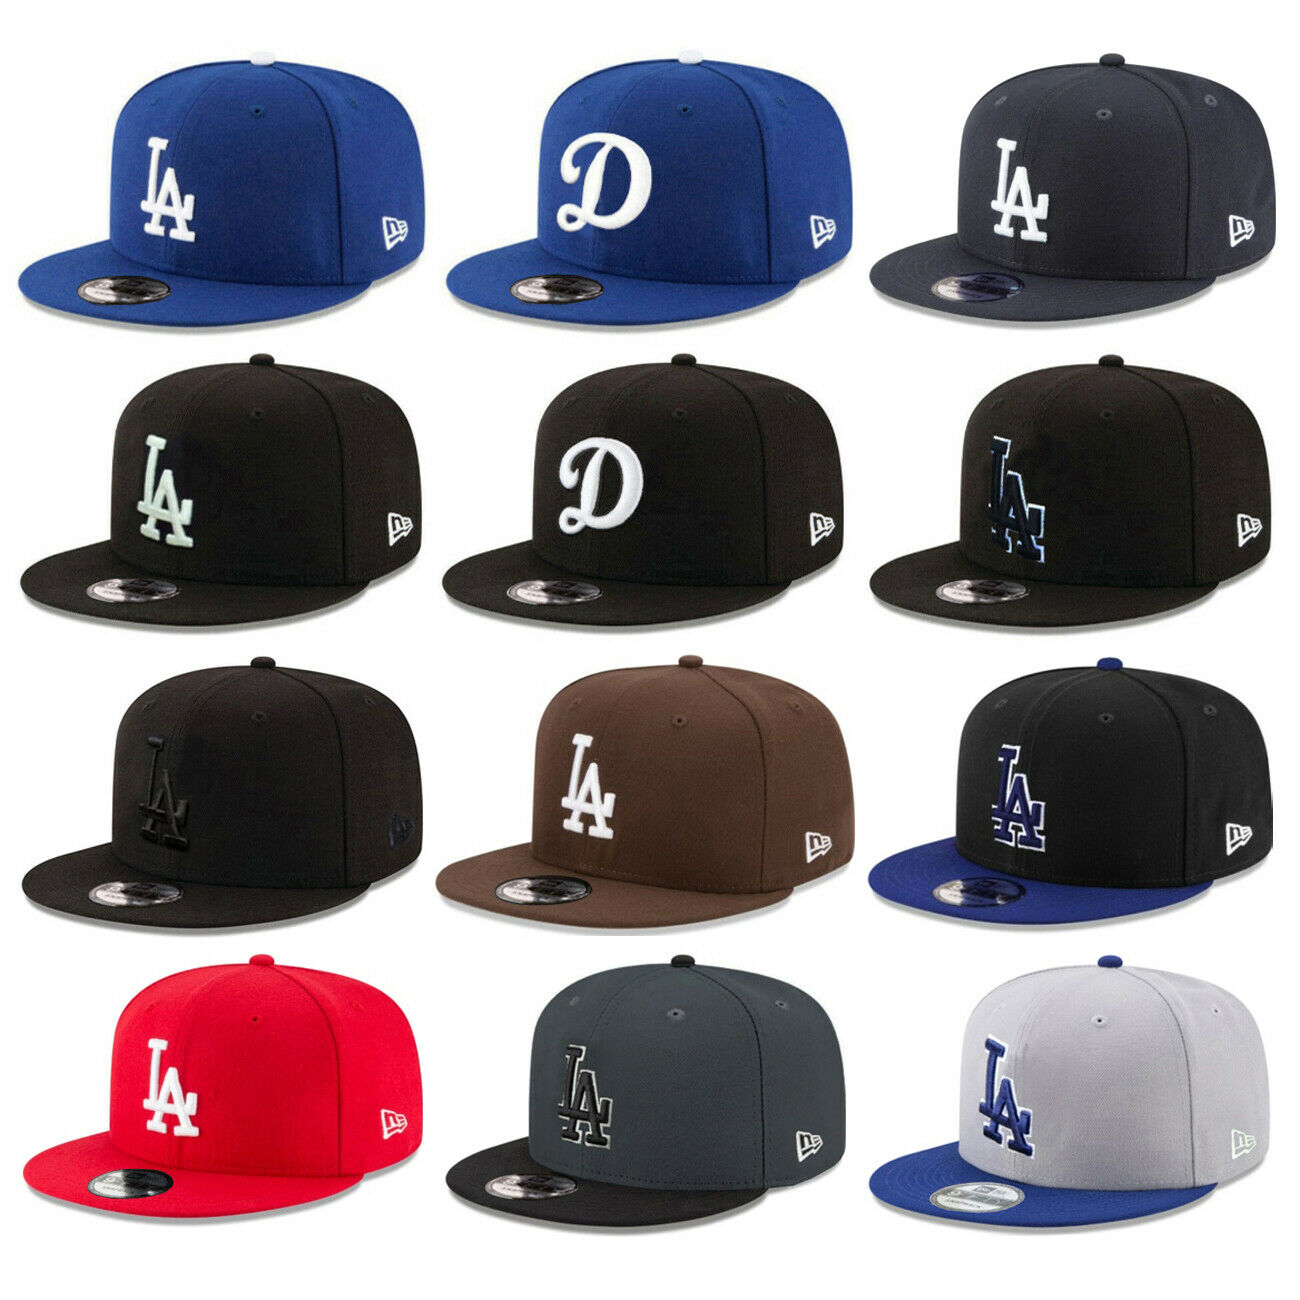 Los Angeles Dodgers Lad Mlb Authentic New Era 9fifty Snapback Cap - 950 Hat